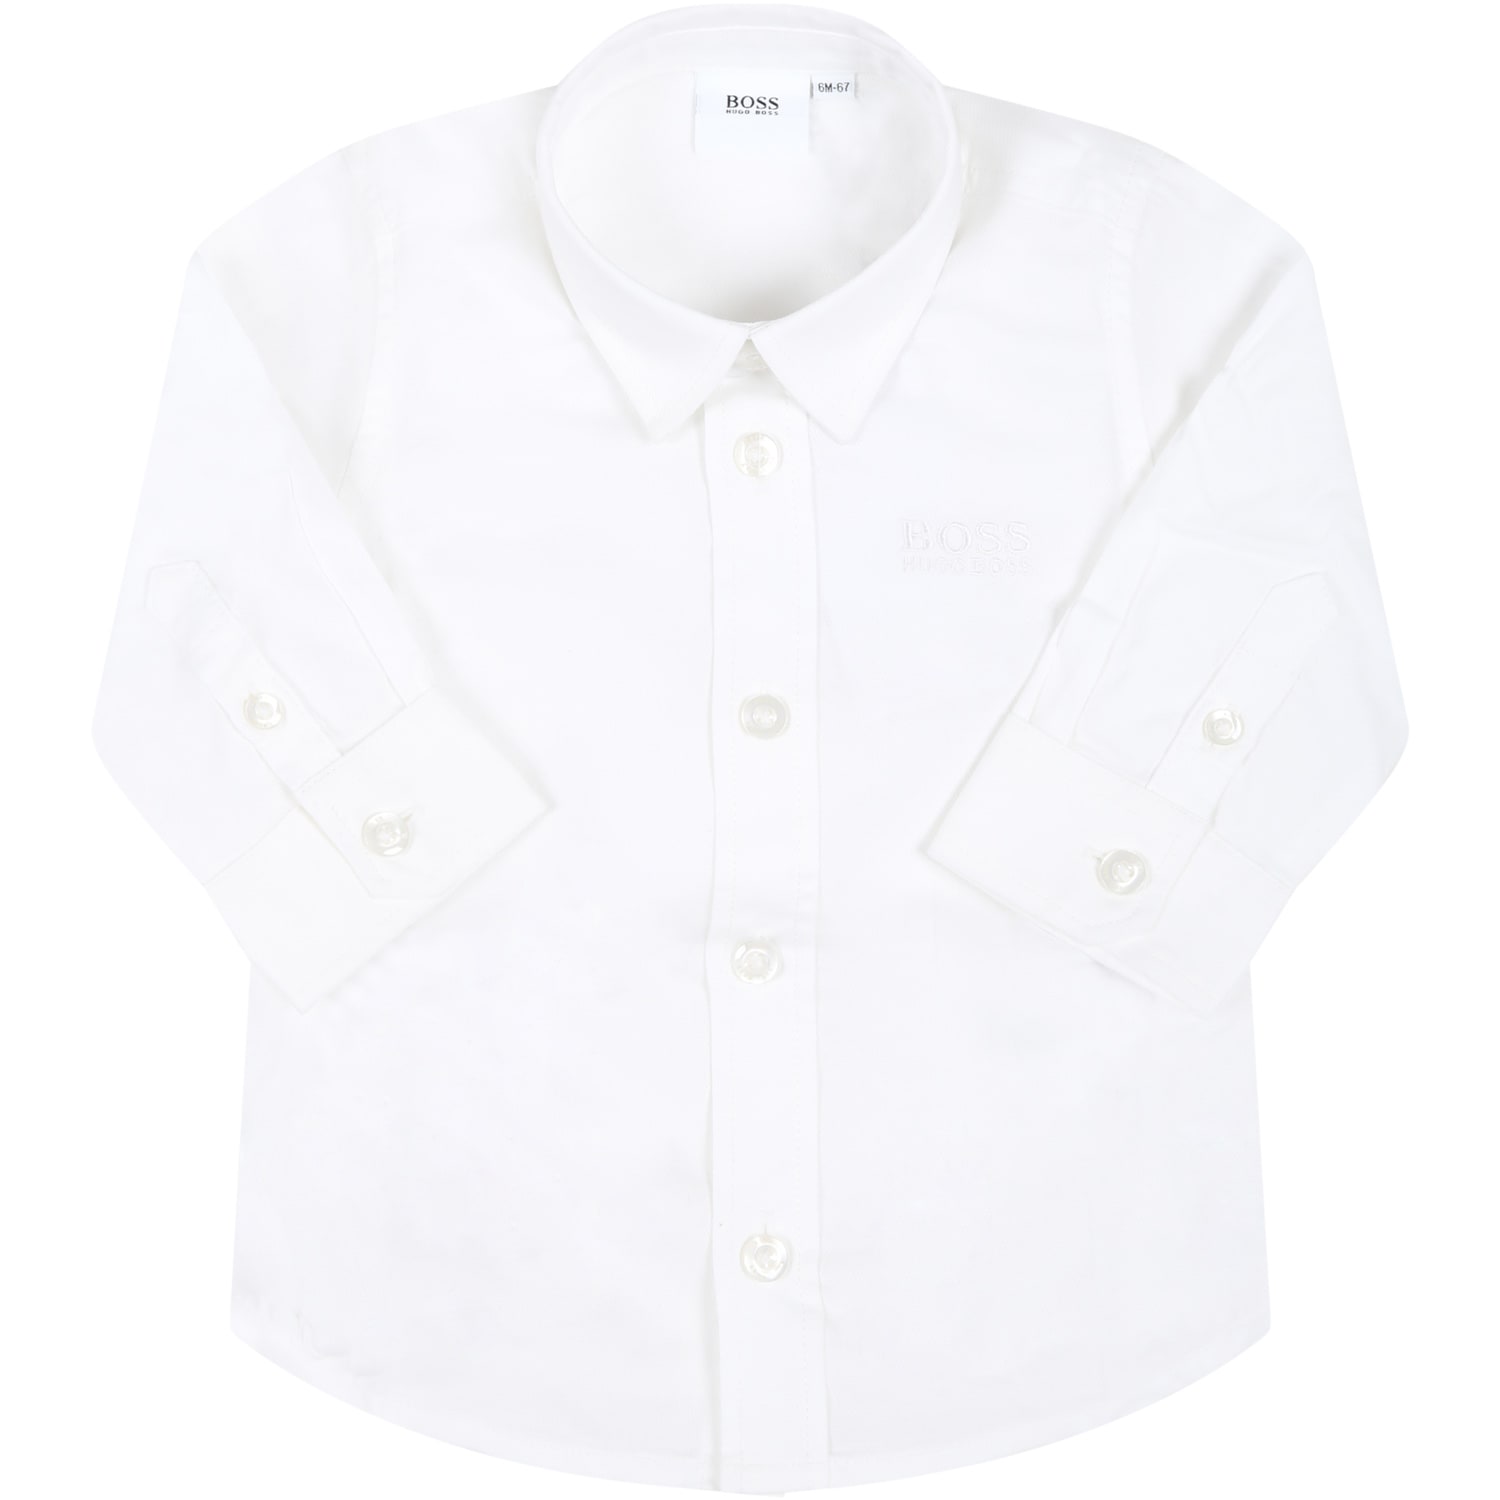 Hugo Boss White Shirt Fot Baby Boy With White Logo